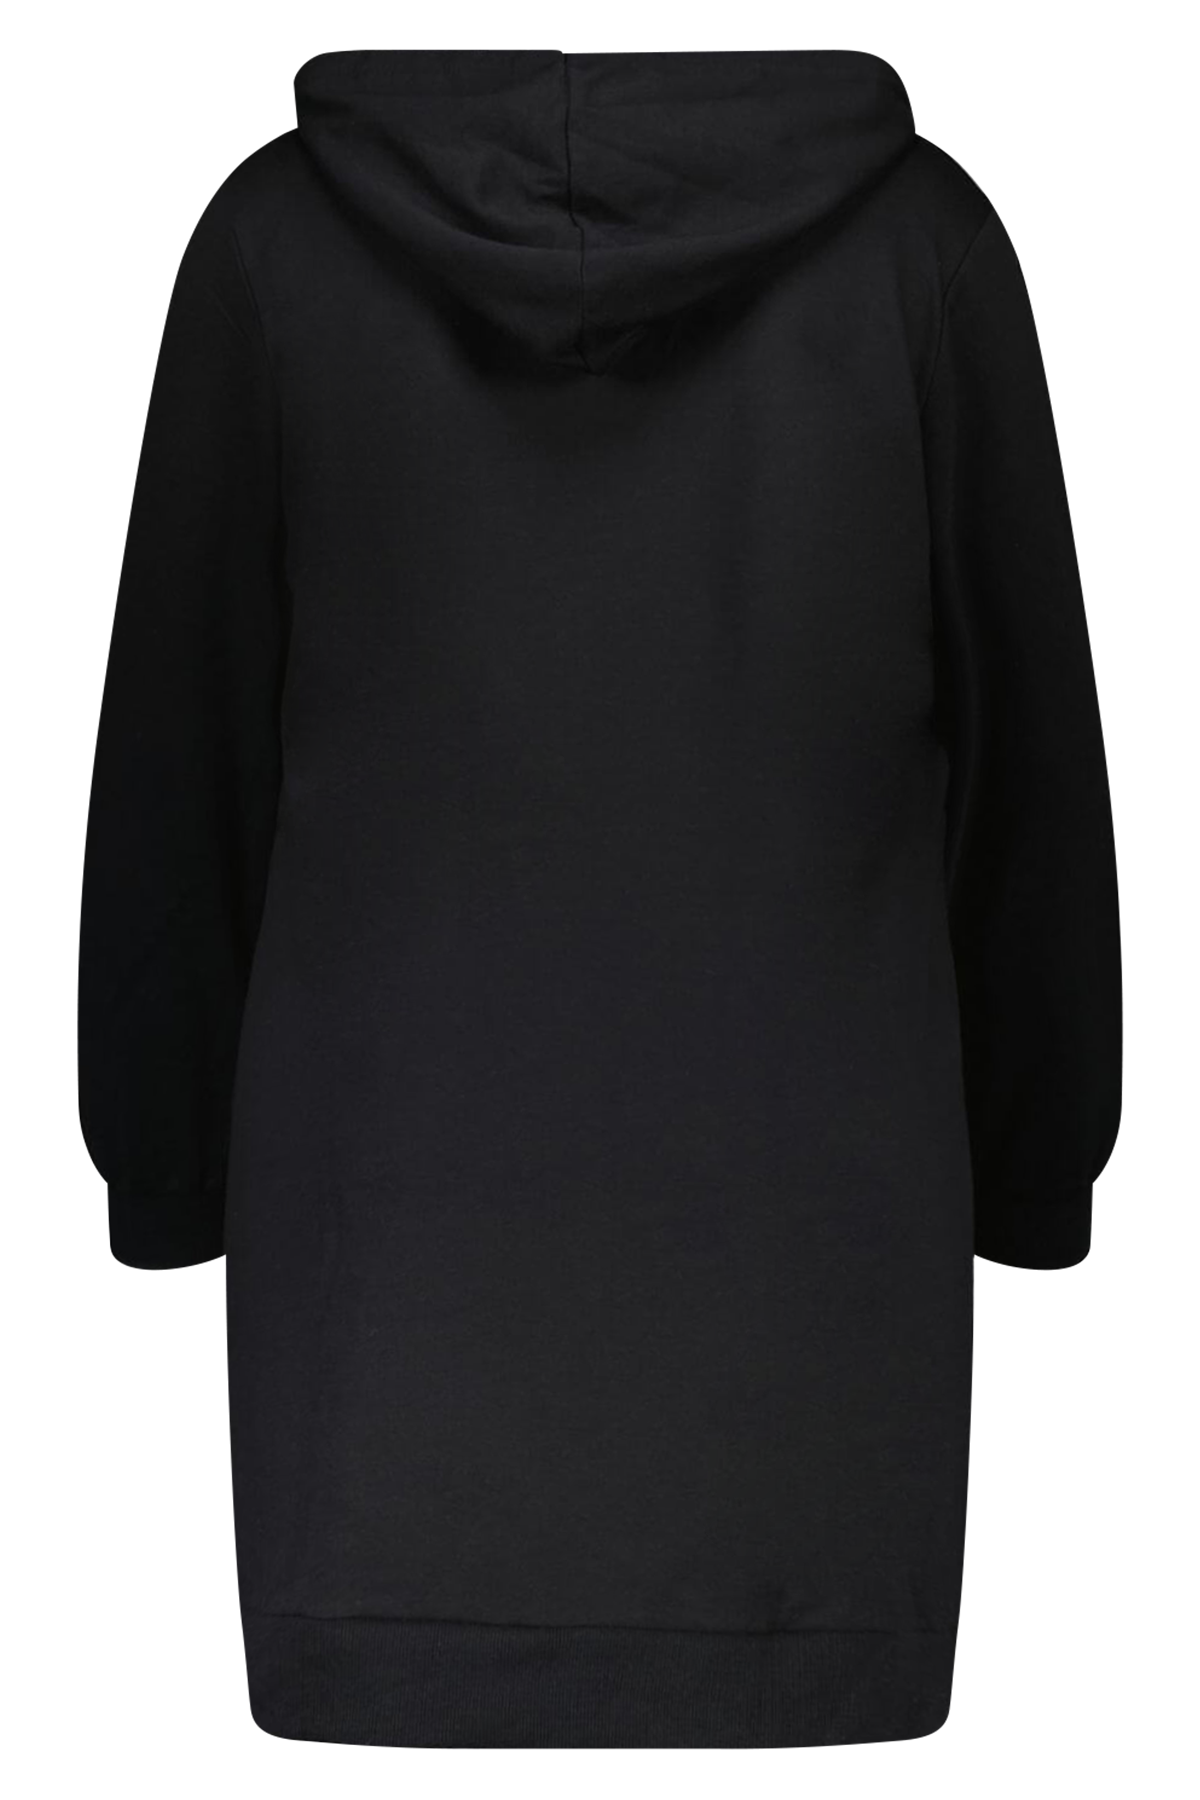 Sweatshirt-Kleid  image 2